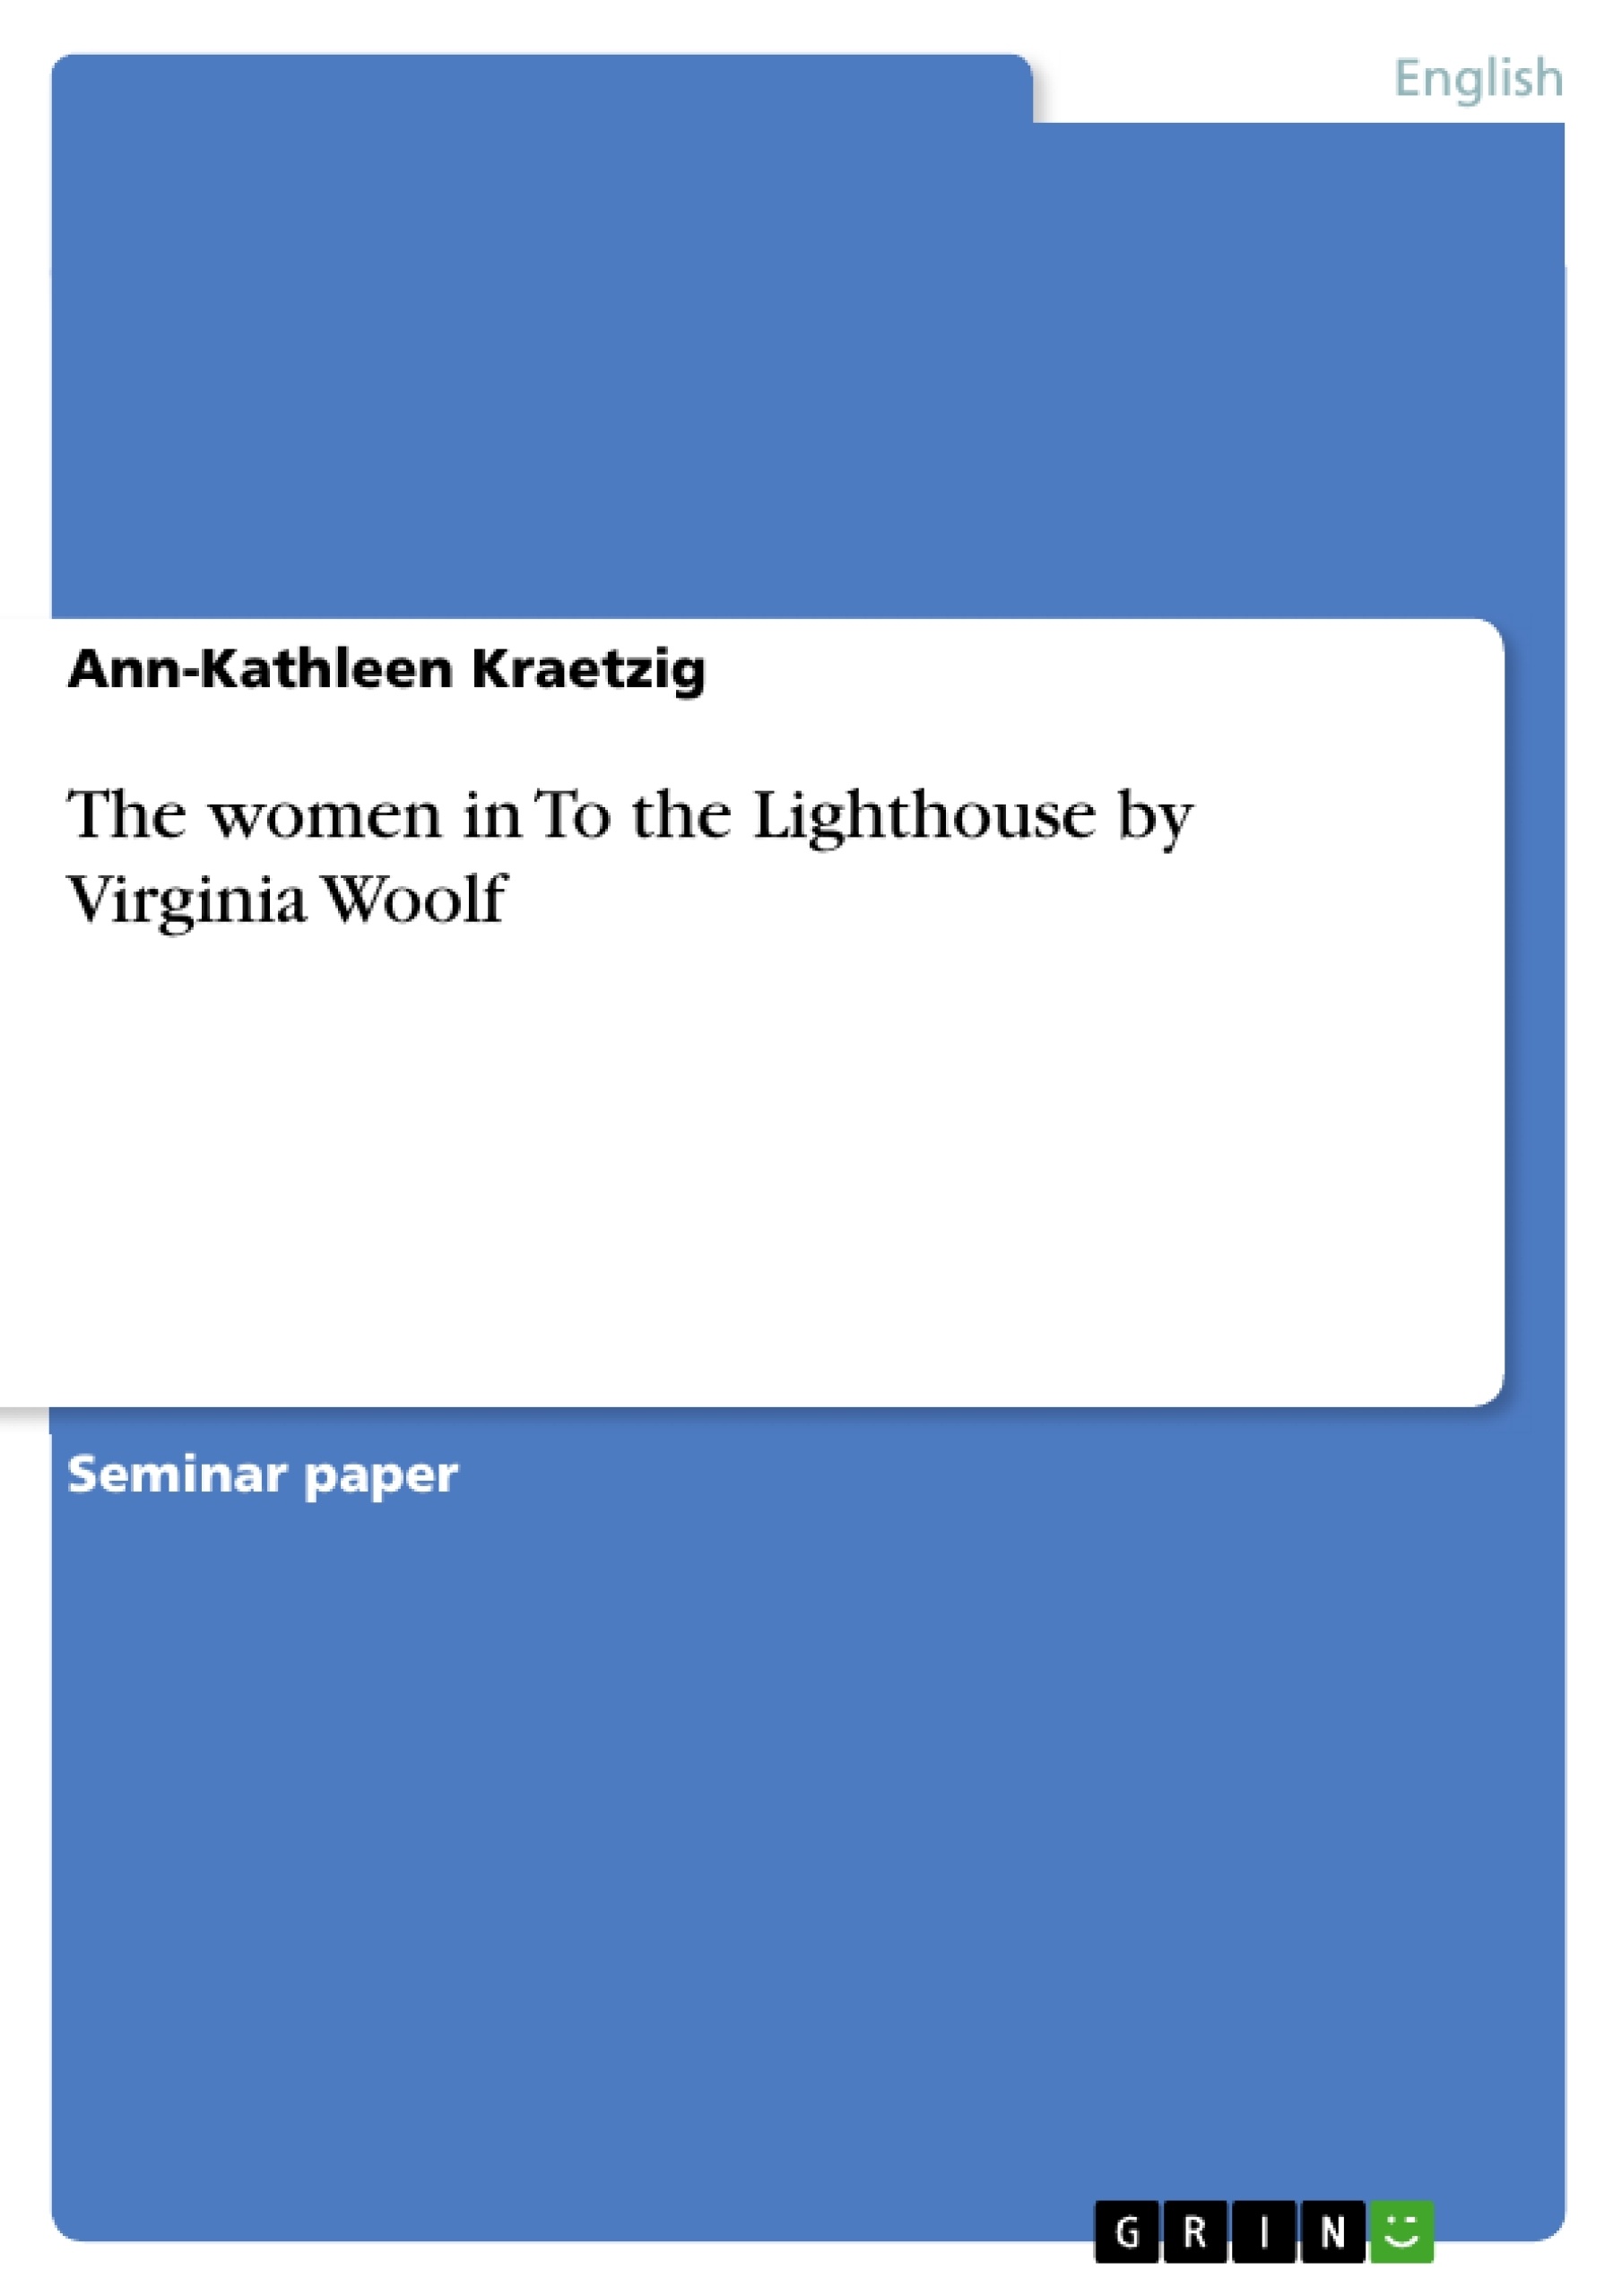 Ebook Virginia Woolf s plete Collection Epub Pdf Best images about Virginia Woolf on Pinterest Virginia